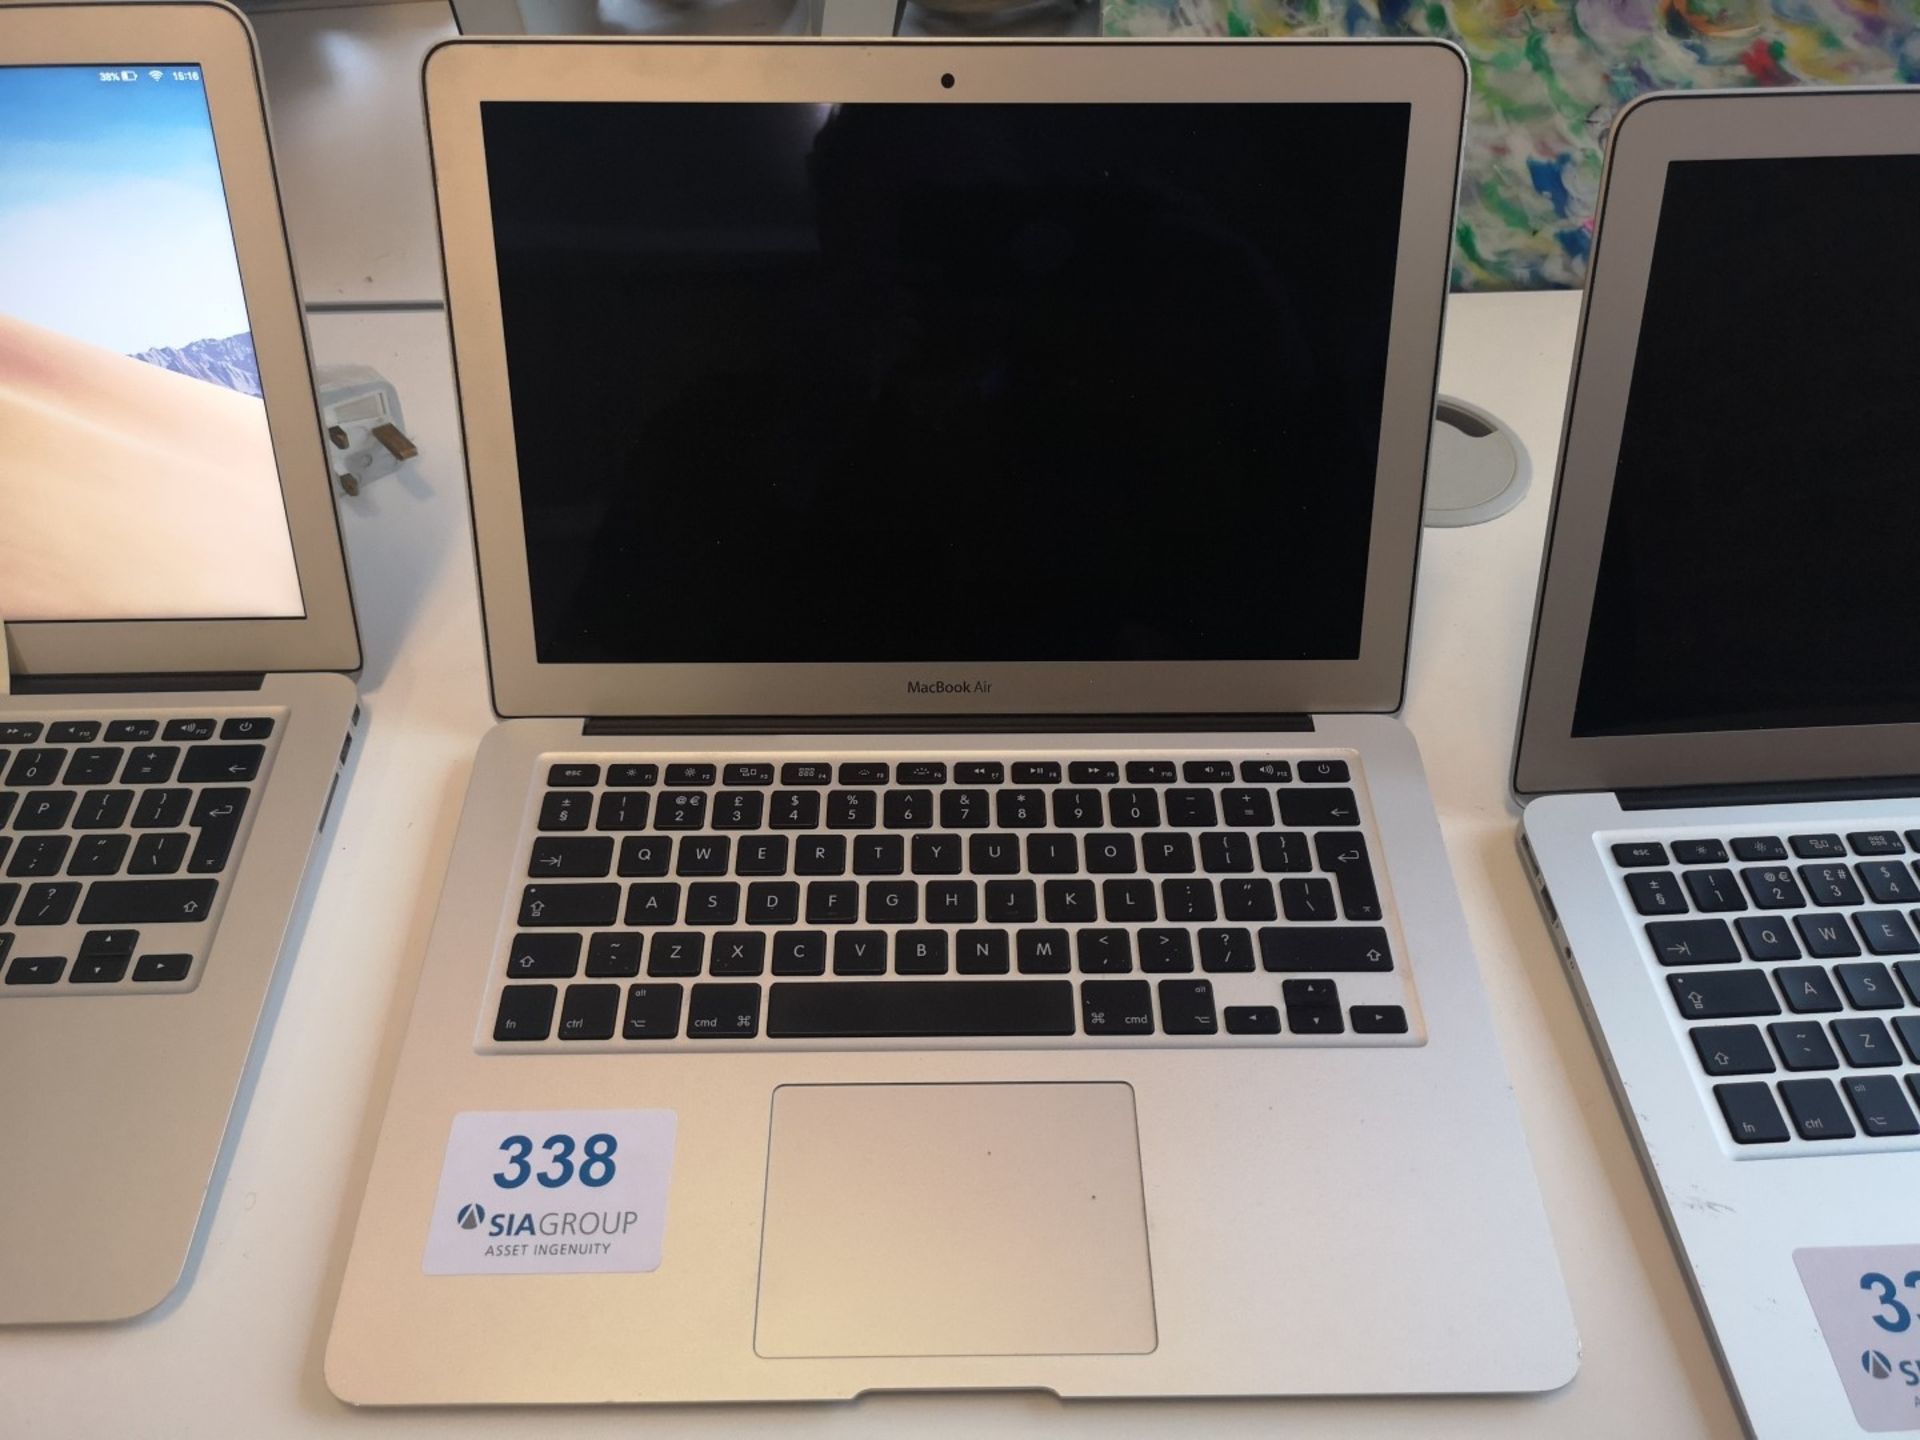 Apple MacBook Air "Core i5" 1.8 13" (Mid-2012)